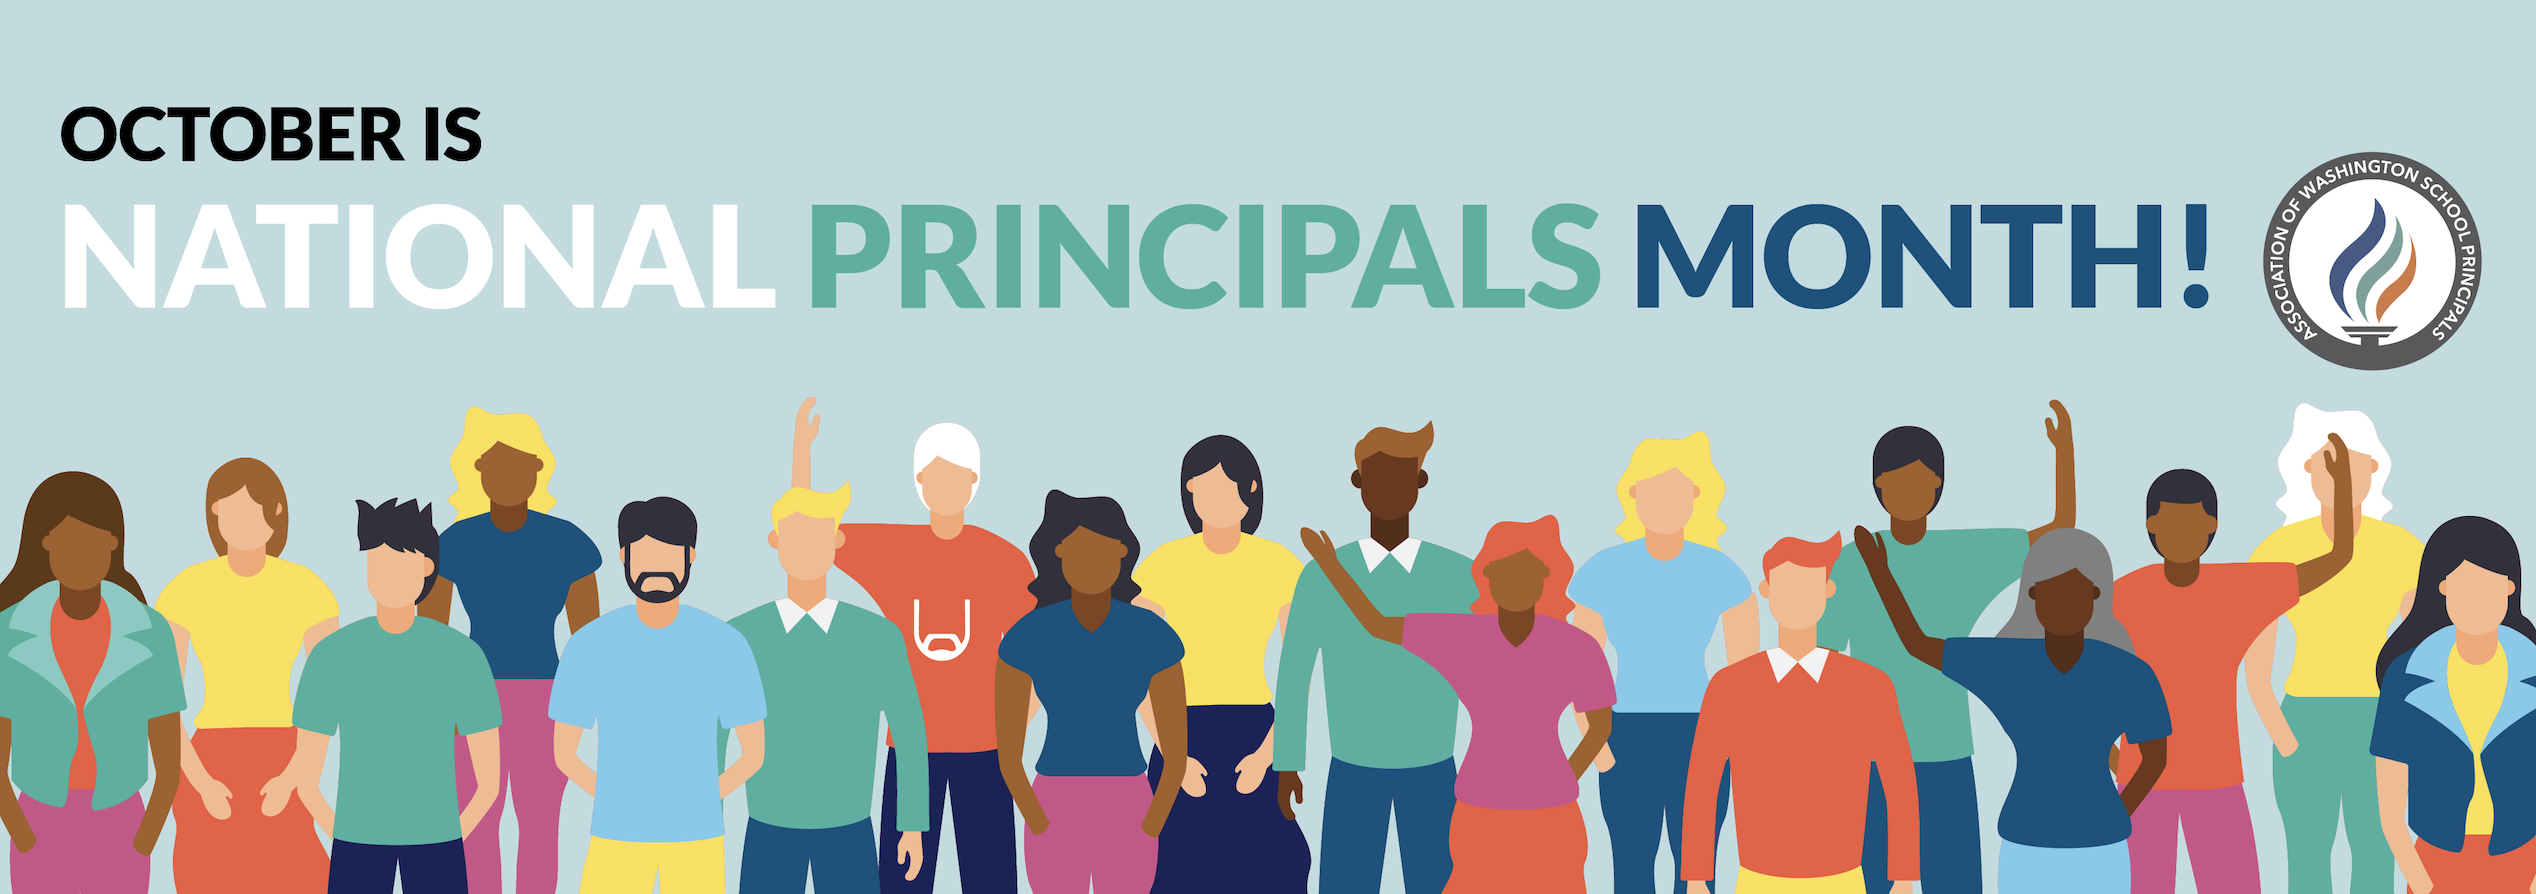 National Principals Month blog header